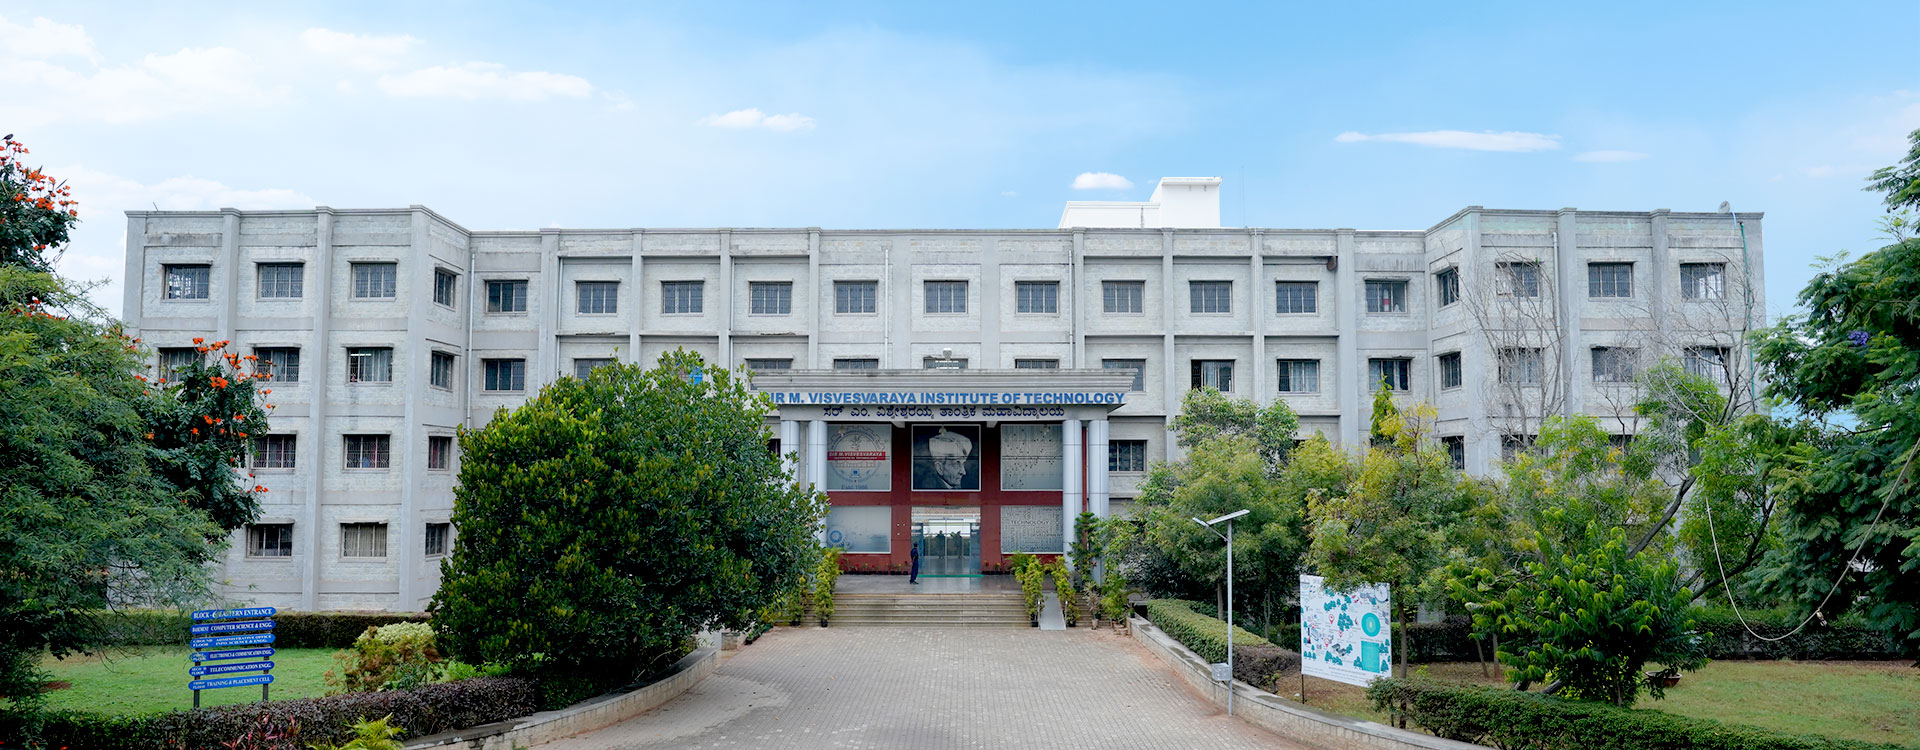 sir m Visvesvaraya institute of technology